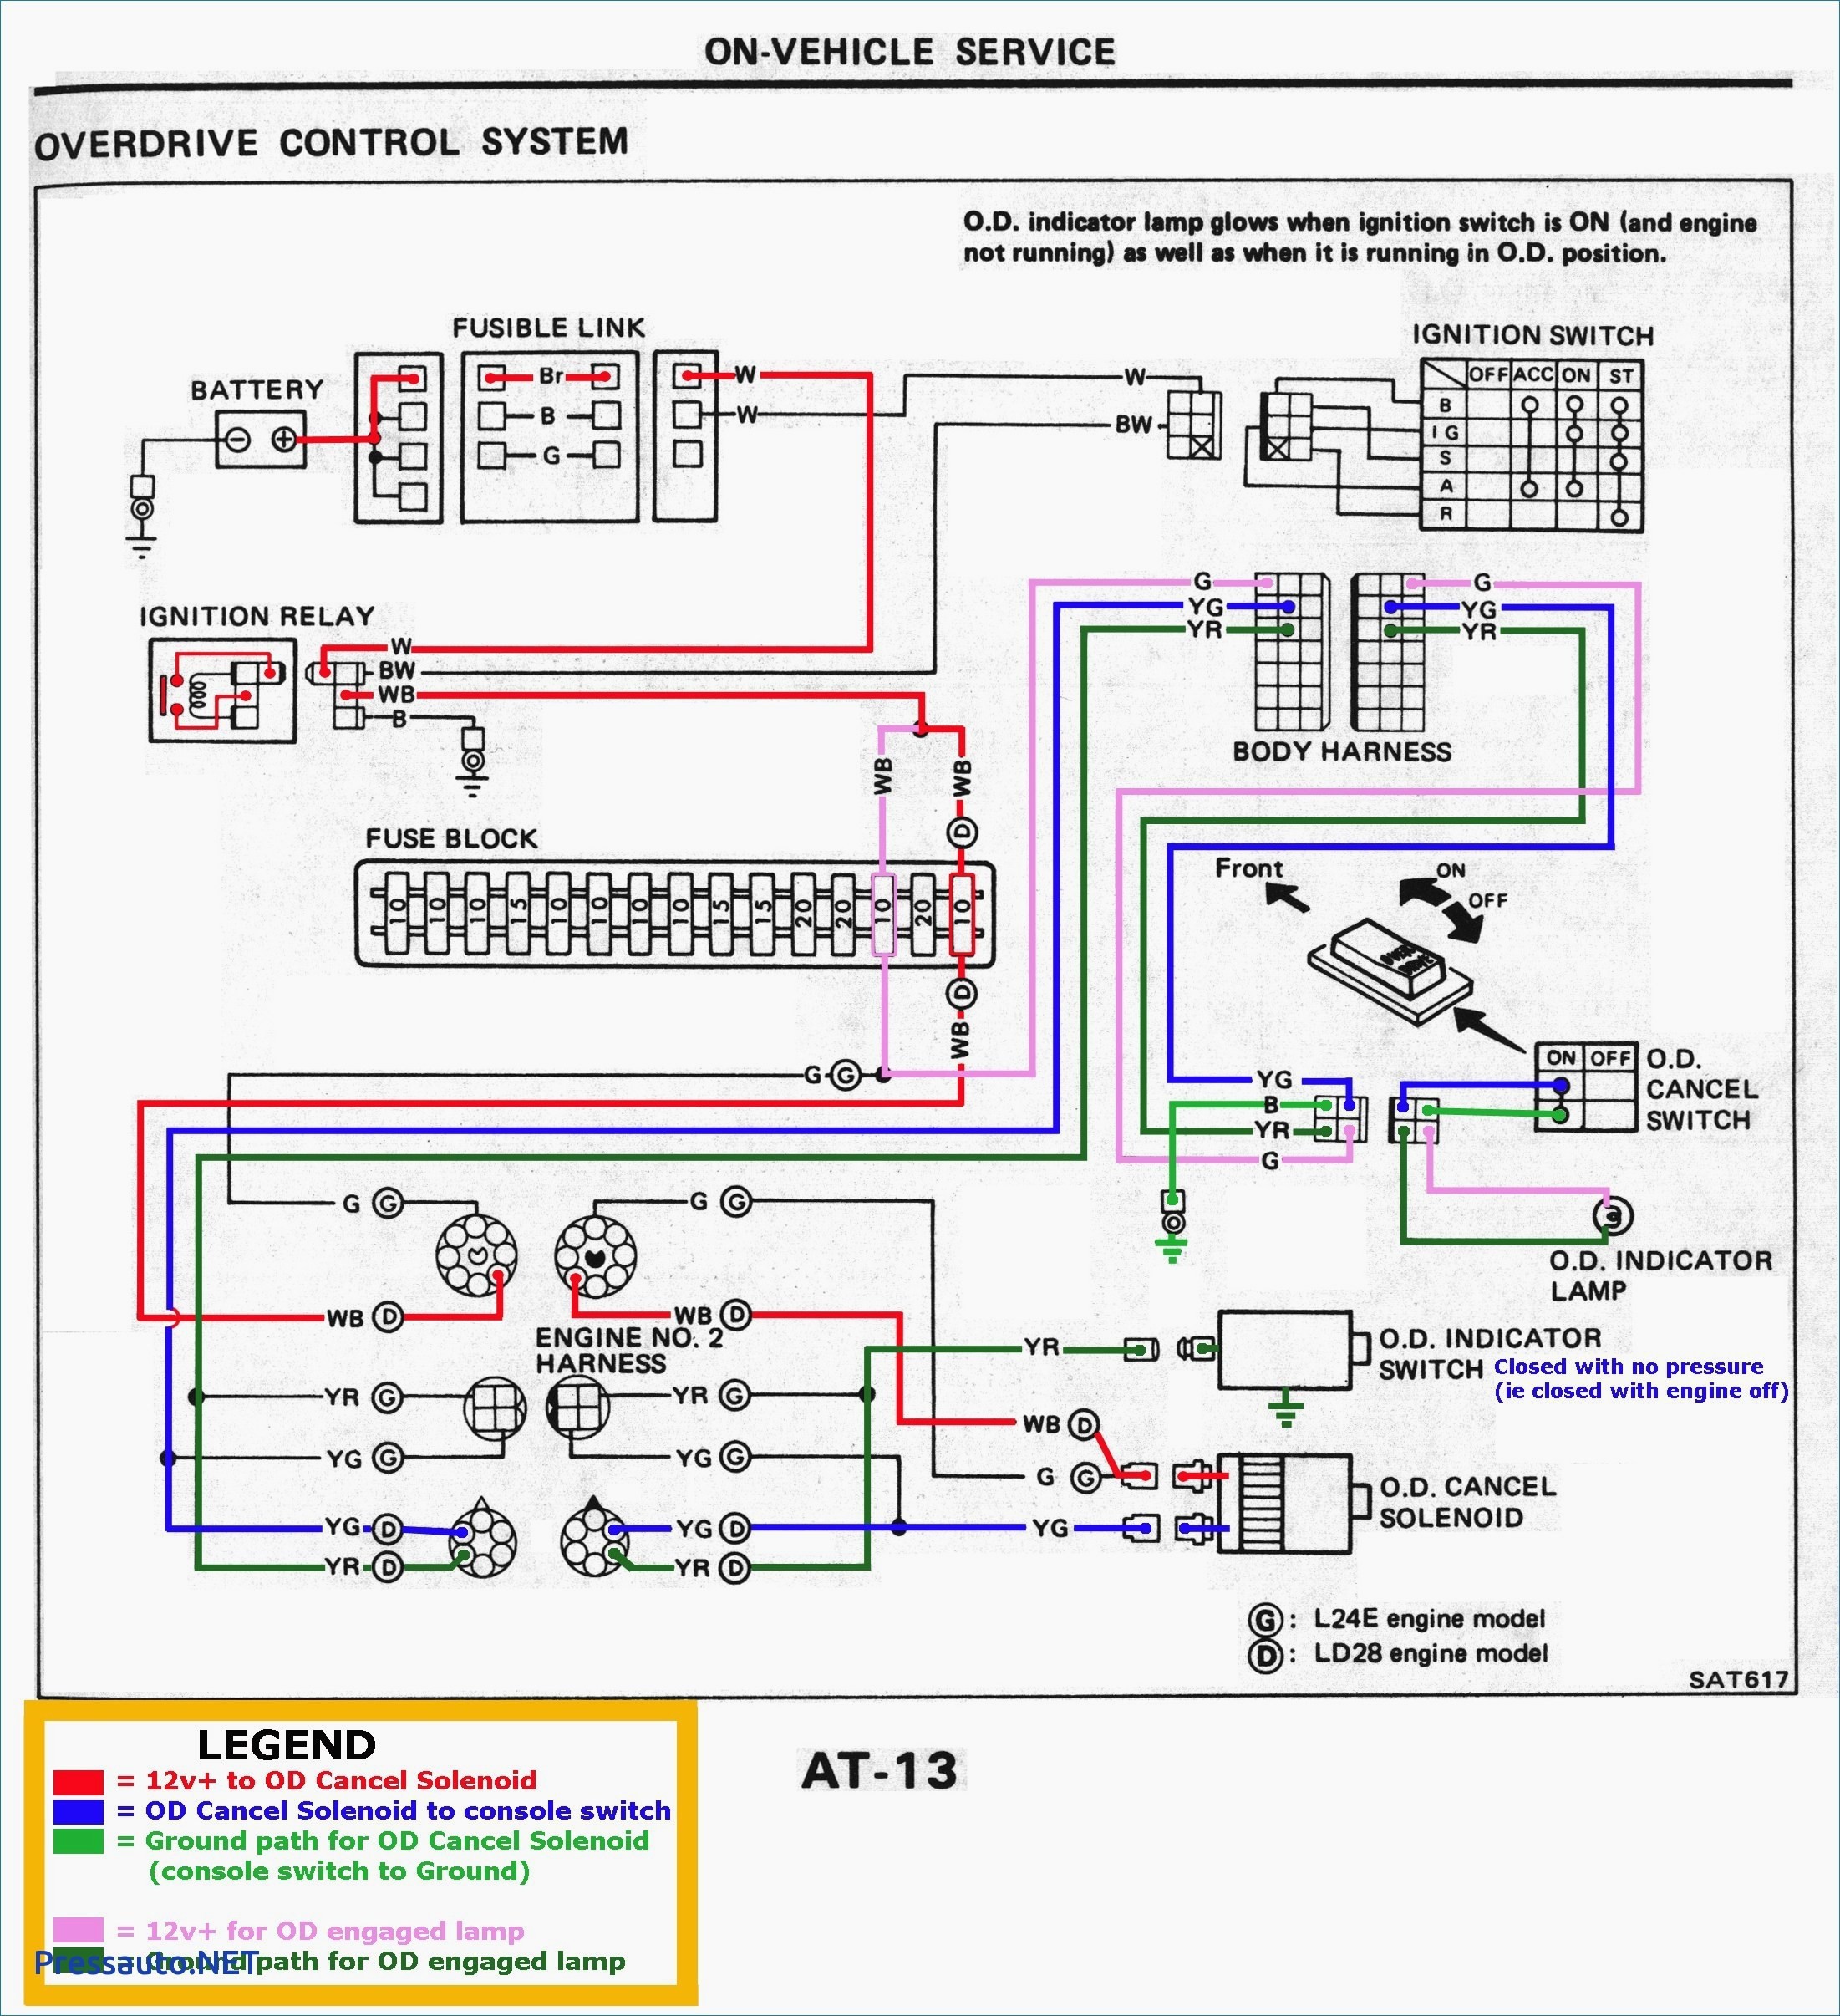 Car Amp Hookup Diagram 2001 Kia Sephia Radio Wiring Diagram 2018 Wiring Diagram for Of Car Amp Hookup Diagram